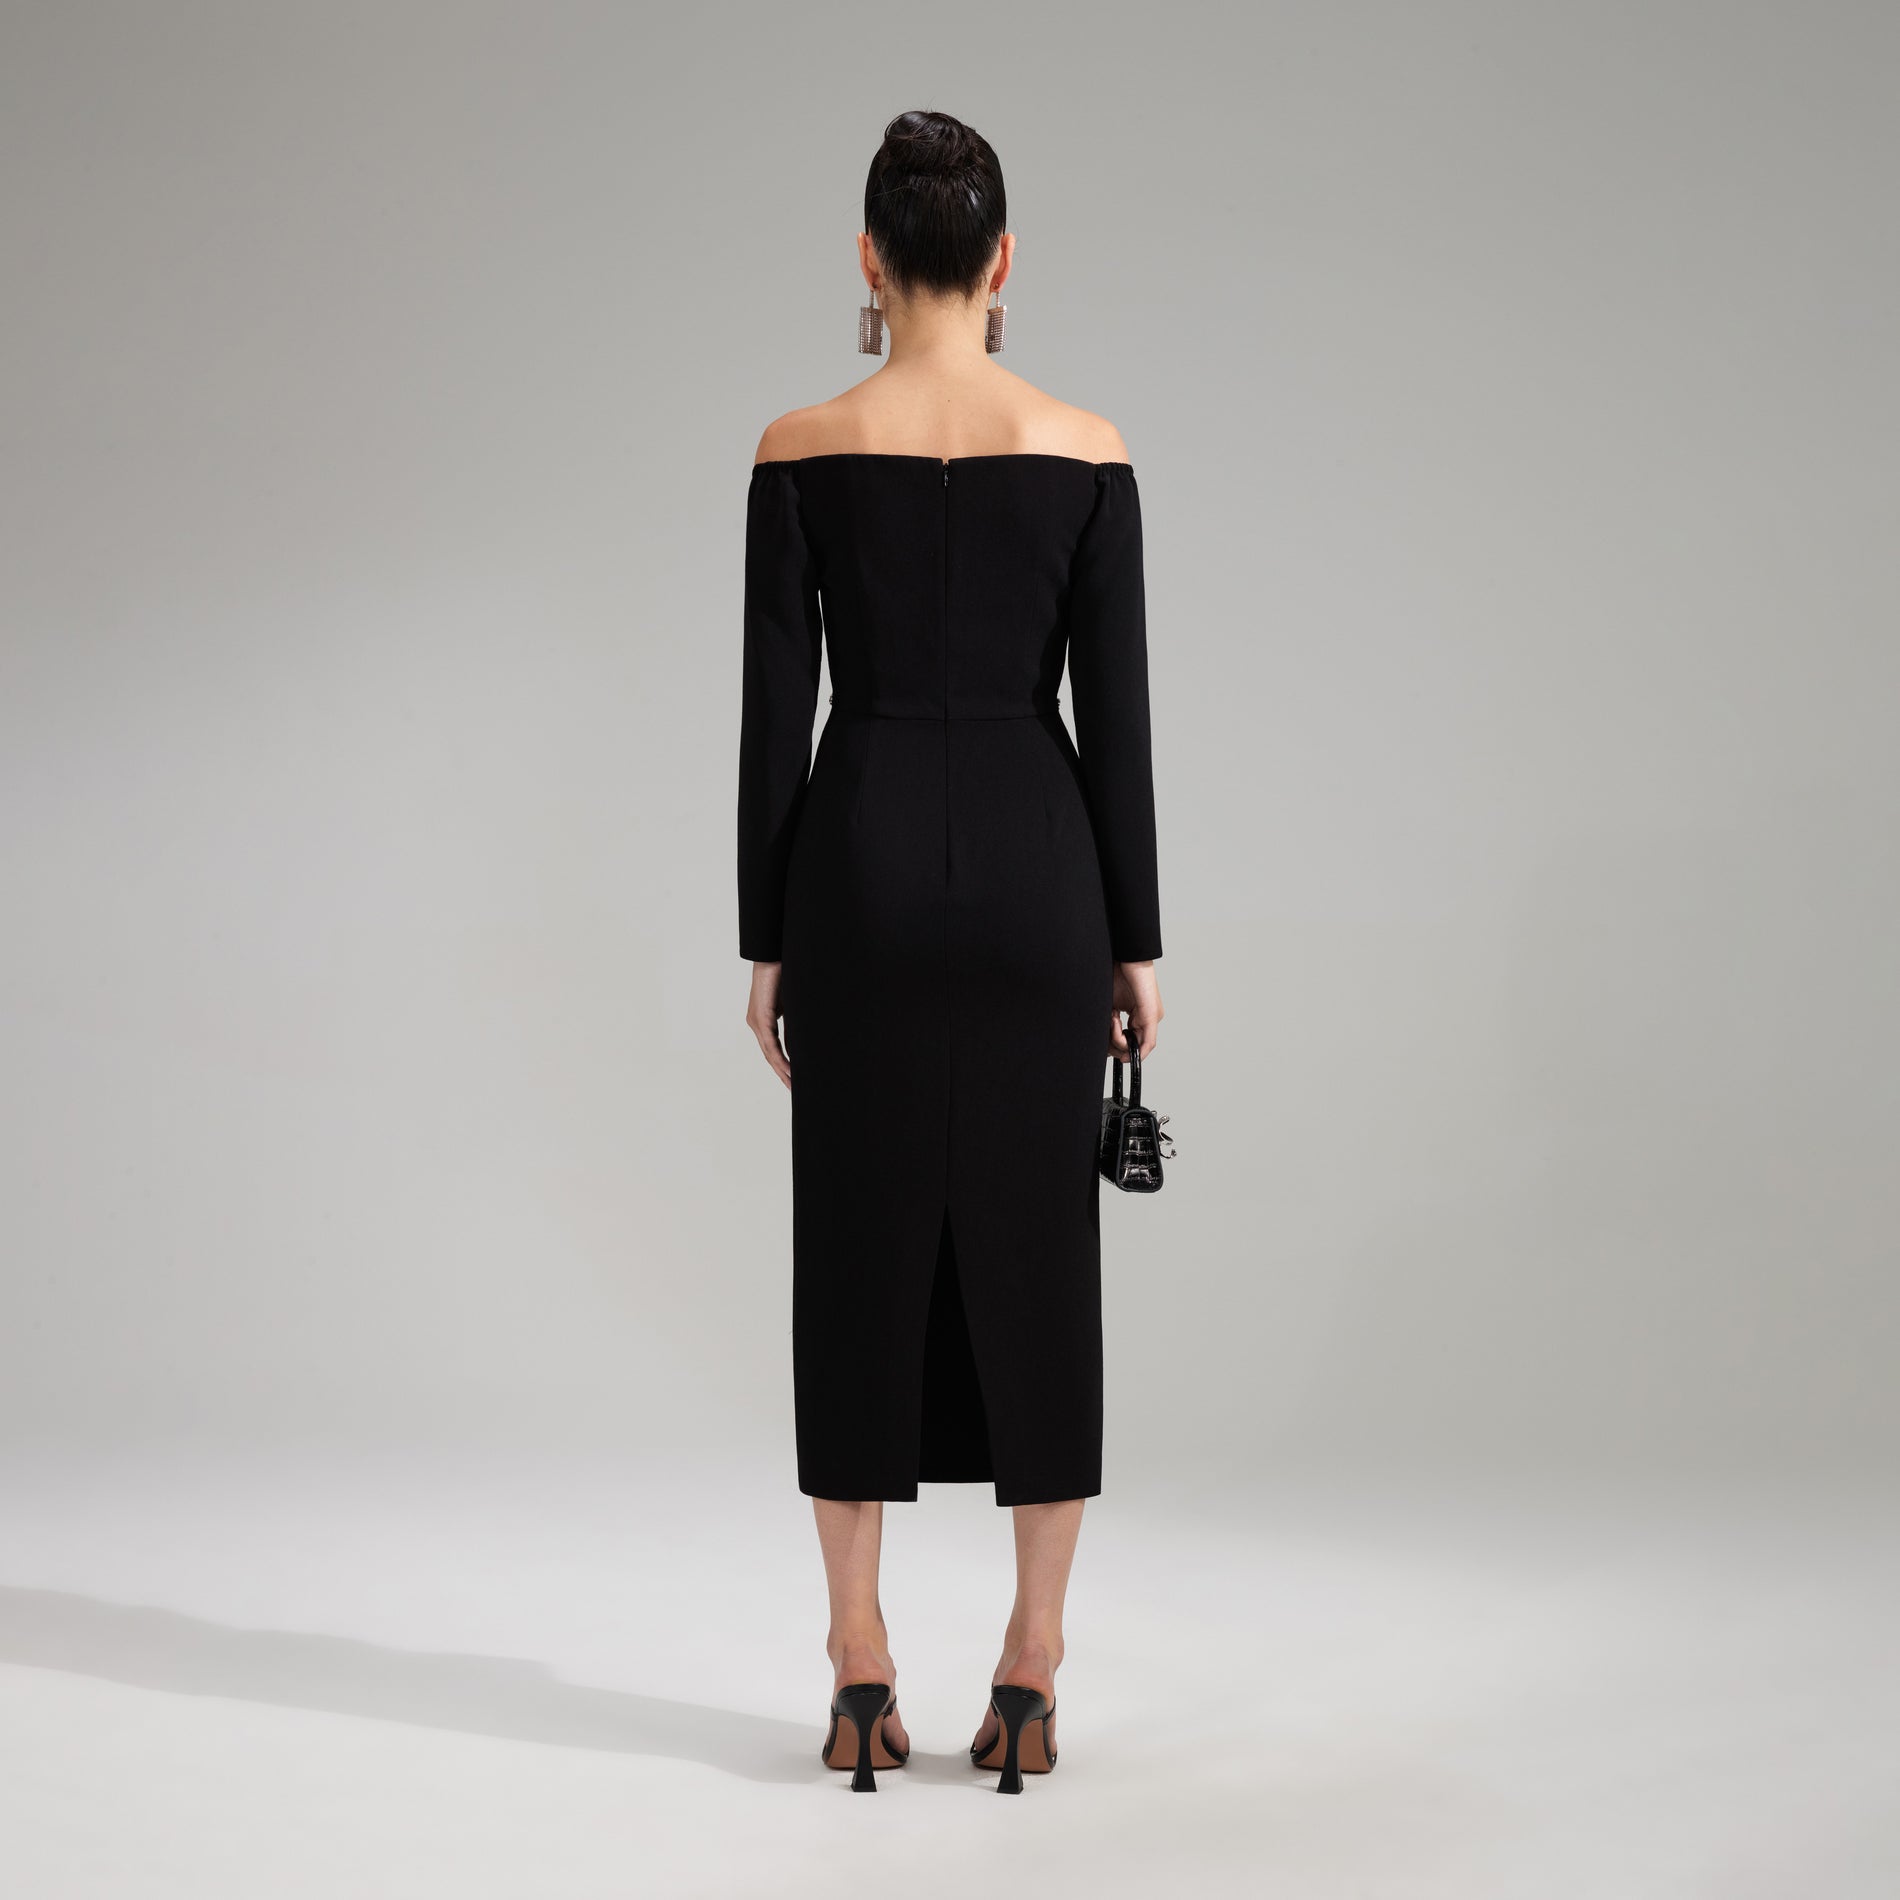 A woman wearing the Black Off Shoulder Heavy Crepe Midi Dress